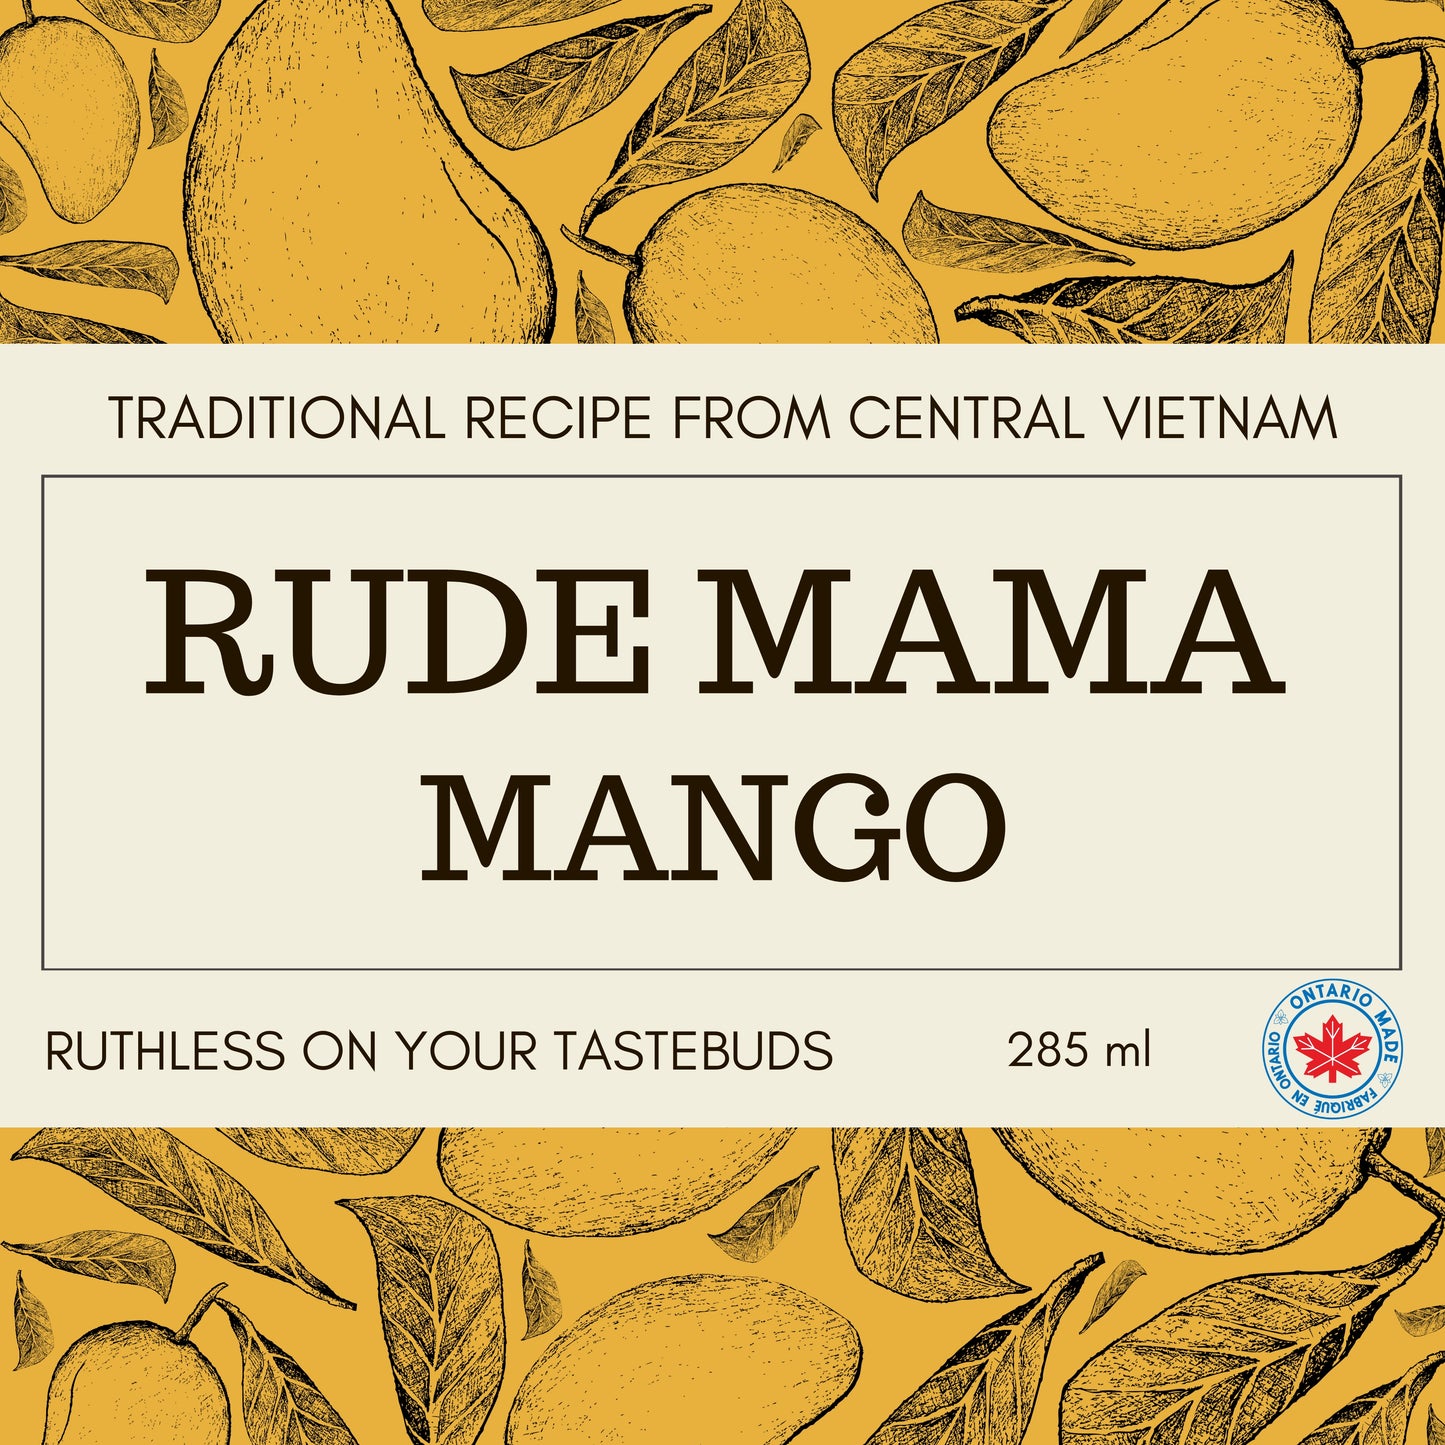 Rude Mama - Authentic Vietnamese Hot Sauce - Toronto, Canada - Mango